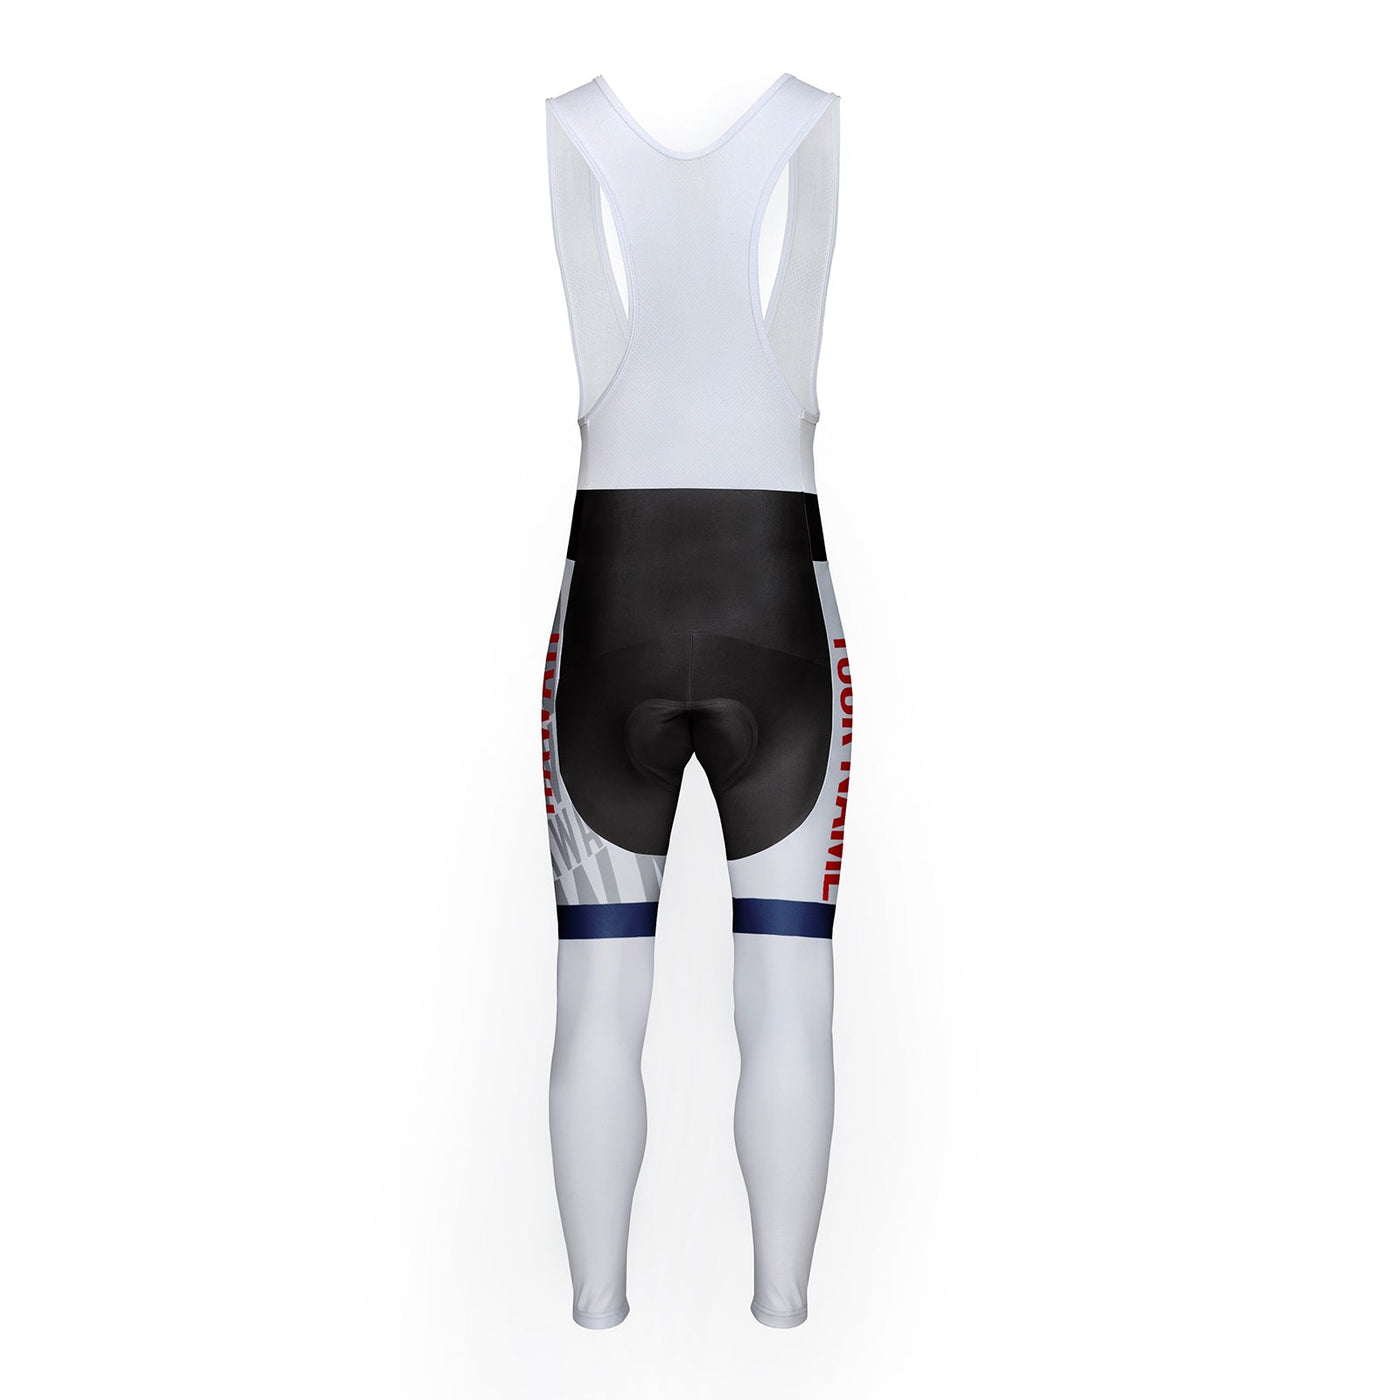 Customized Hawaii Unisex Thermal Fleece Cycling Bib Tights Long Pants